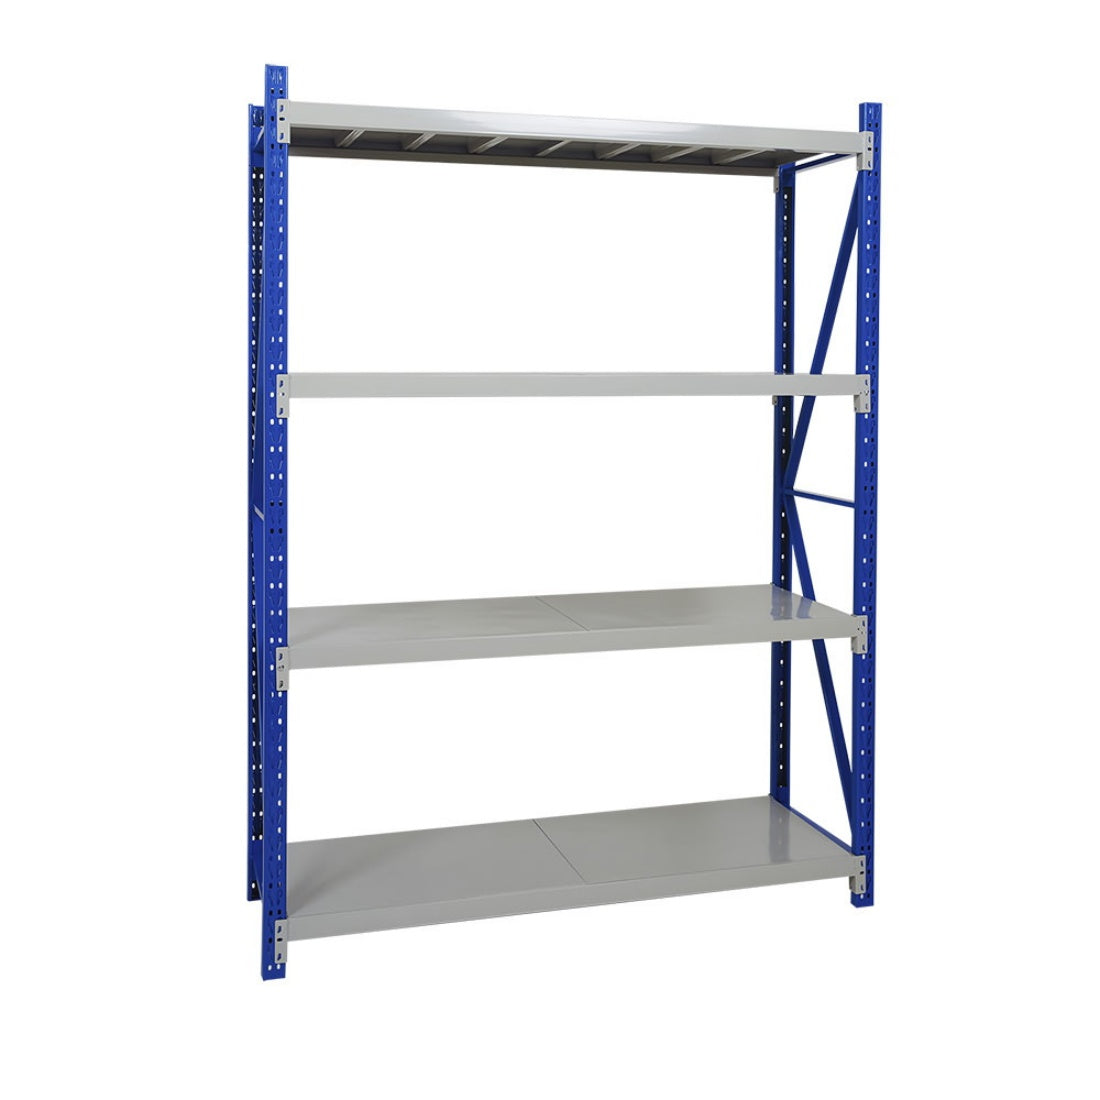 1.5 X 2m Warehouse Garage Steel Storage Metal Shelves